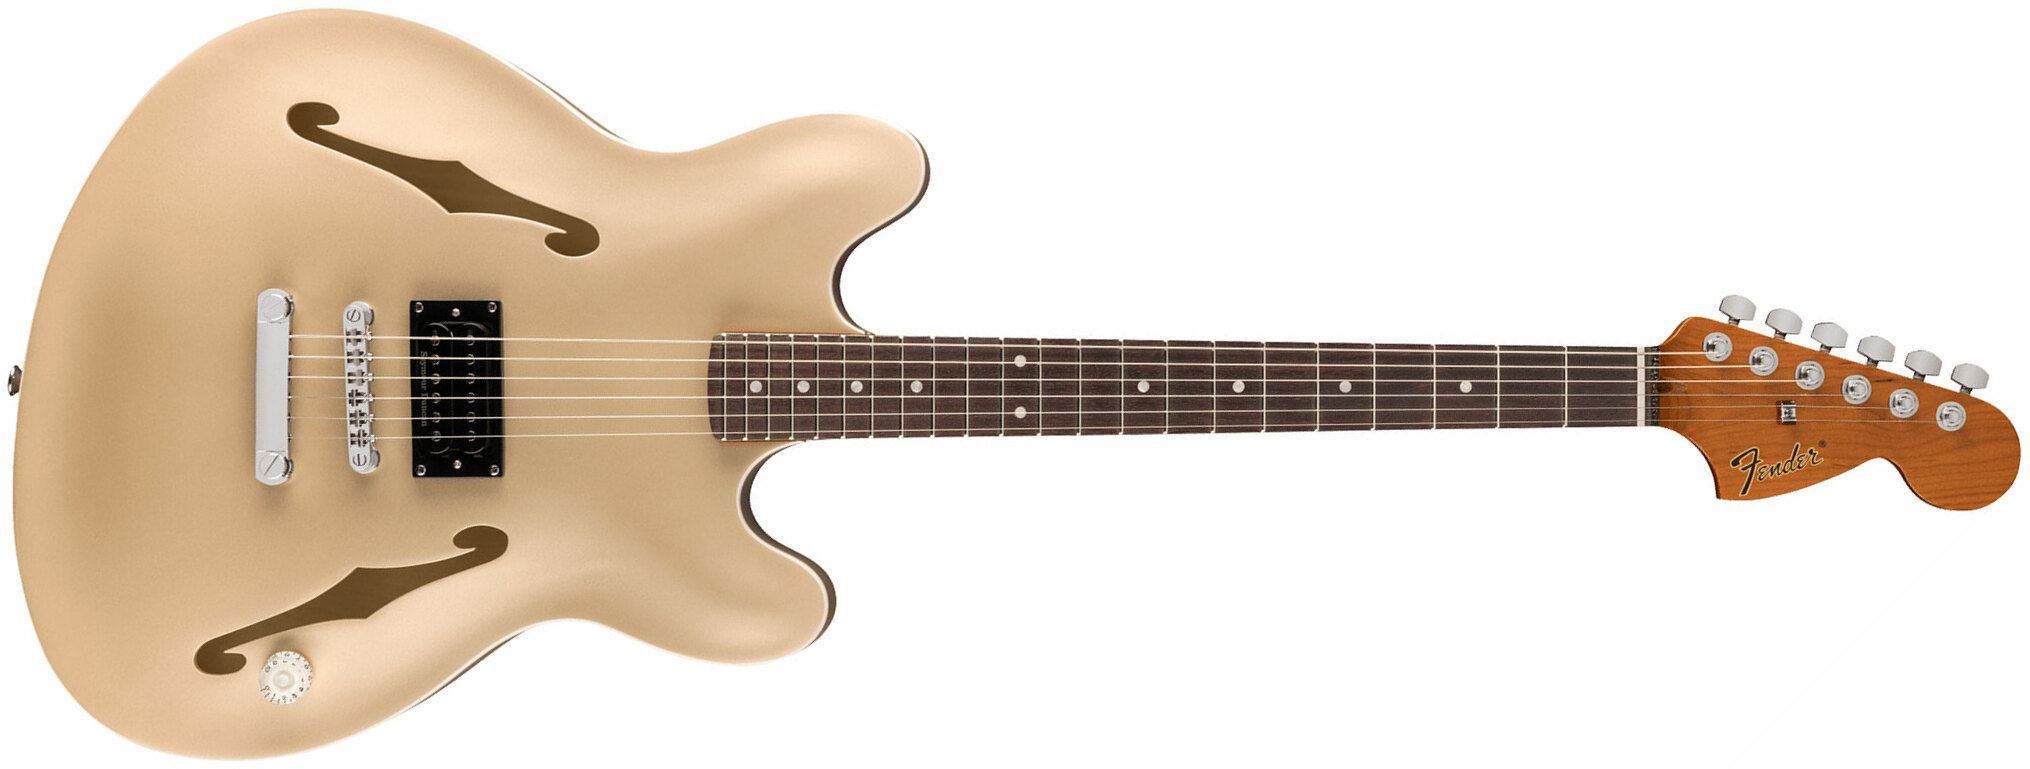 Fender Tom Delonge Starcaster 1h Seymour Duncan Ht Rw - Satin Shoreline Gold - Guitarra electrica retro rock - Main picture